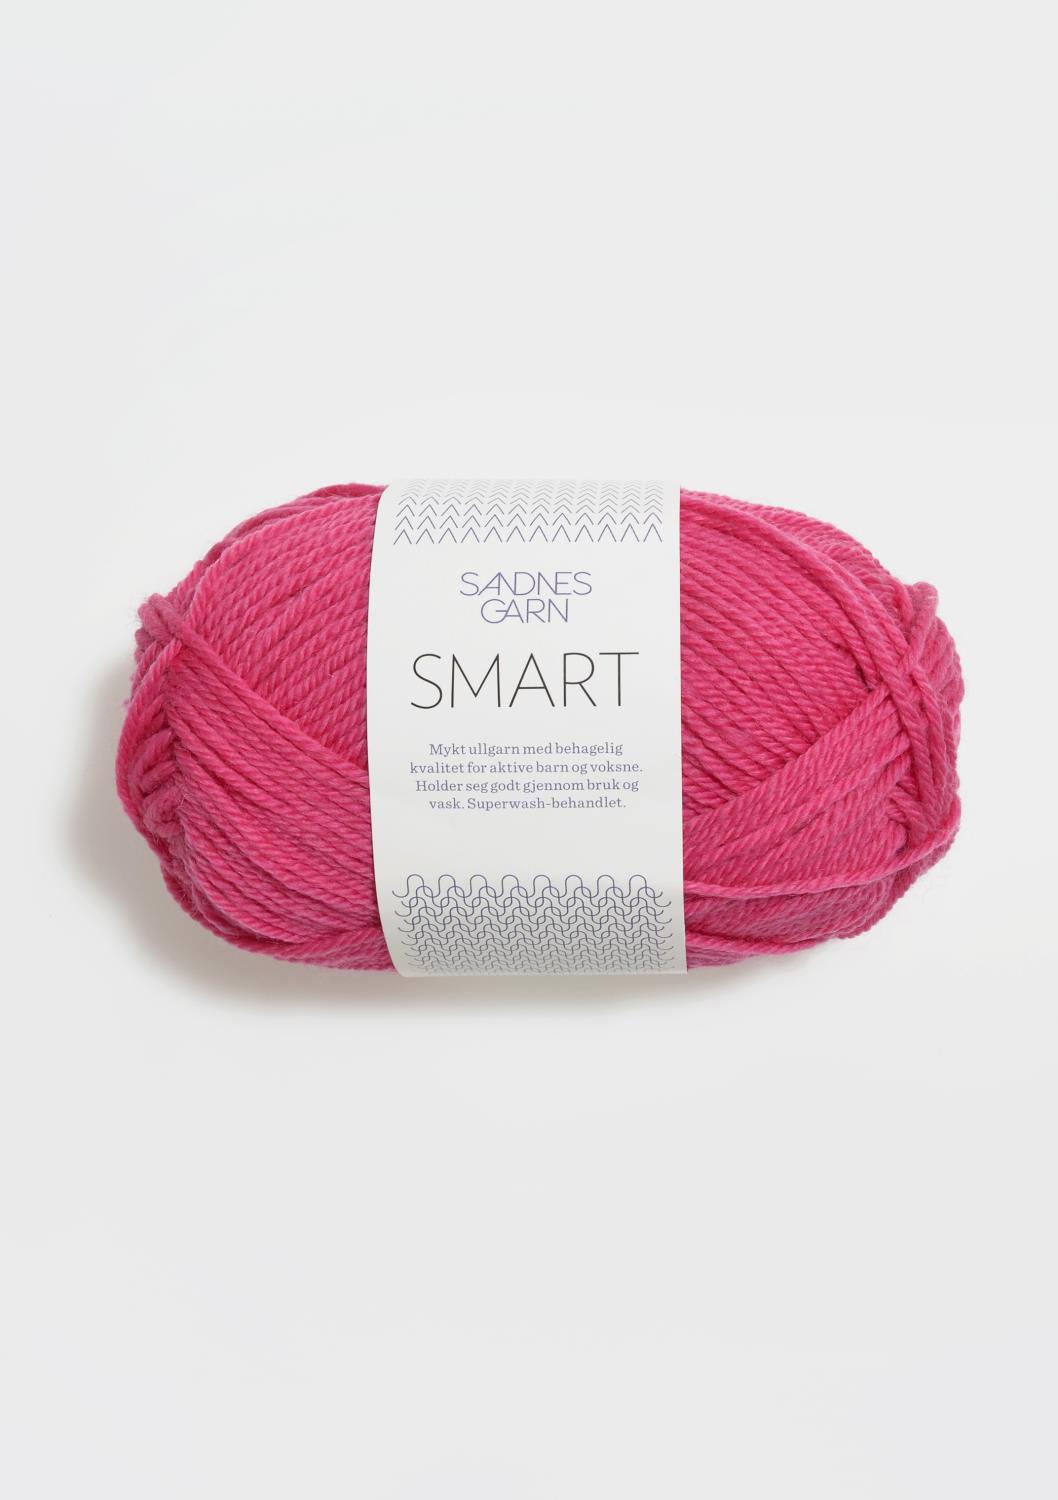 Smart Sandnes 4507 - Rosa